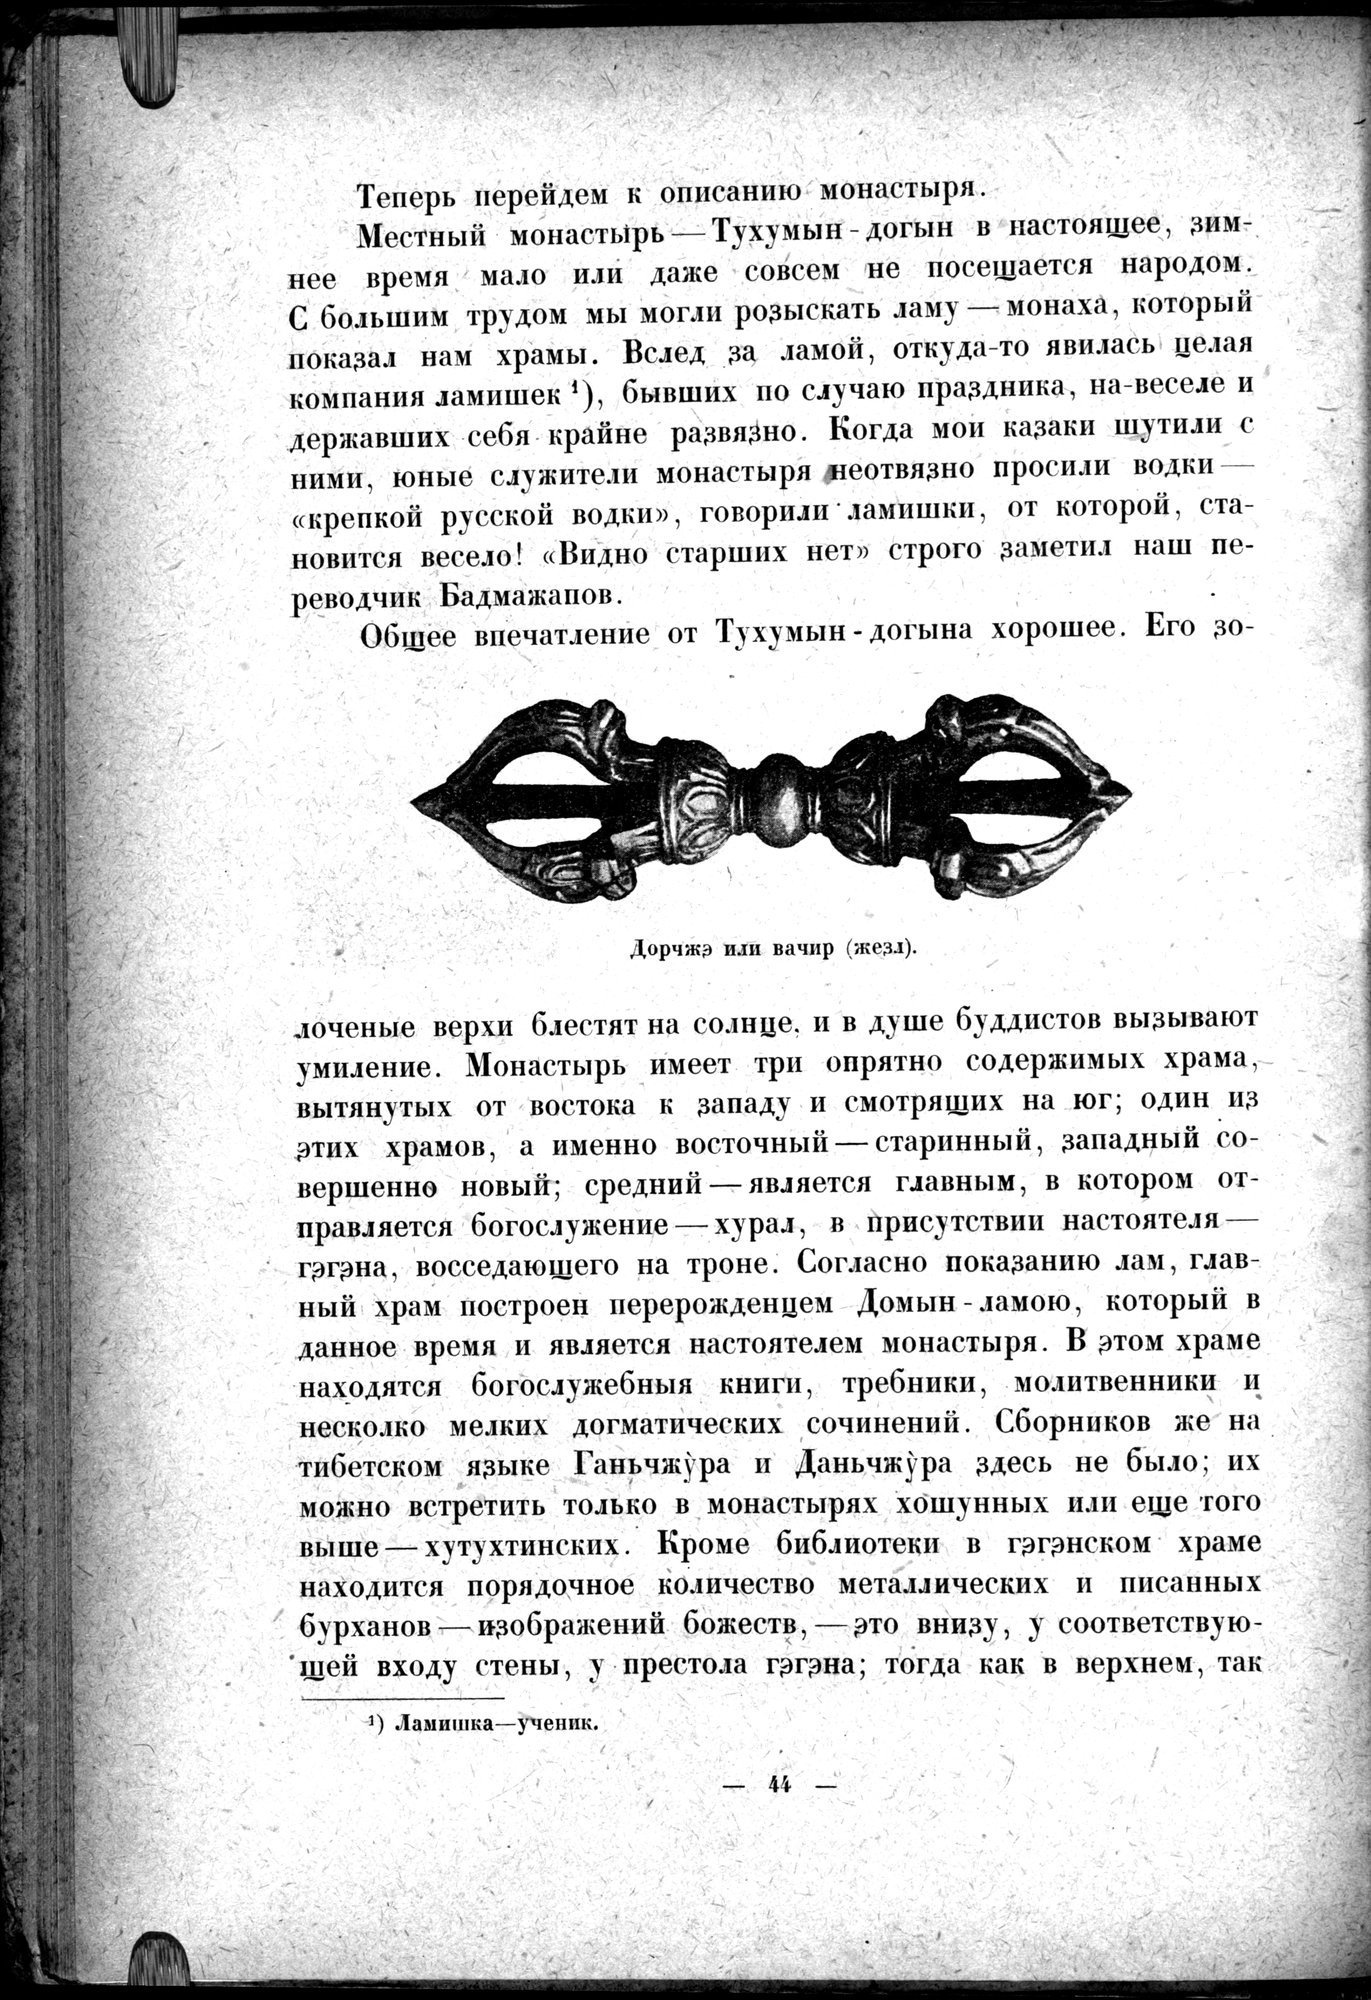 Mongoliya i Amdo i mertby gorod Khara-Khoto : vol.1 / Page 68 (Grayscale High Resolution Image)